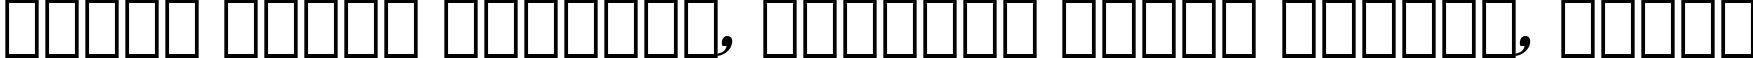 Пример написания шрифтом Charter Bold Italic BT текста на белорусском